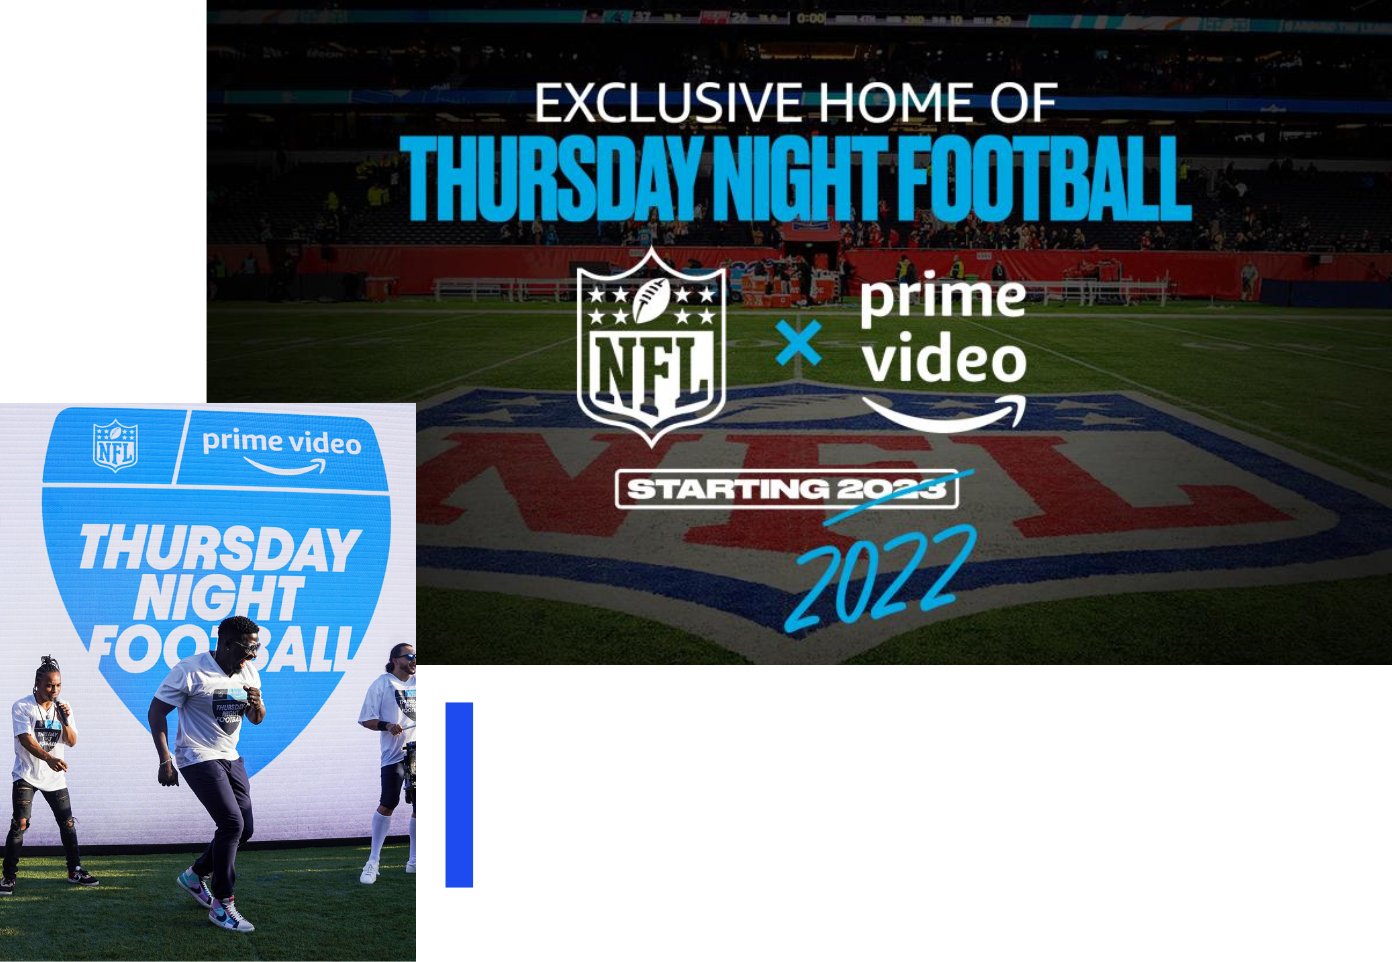 amazon prime video thursday night football schedule